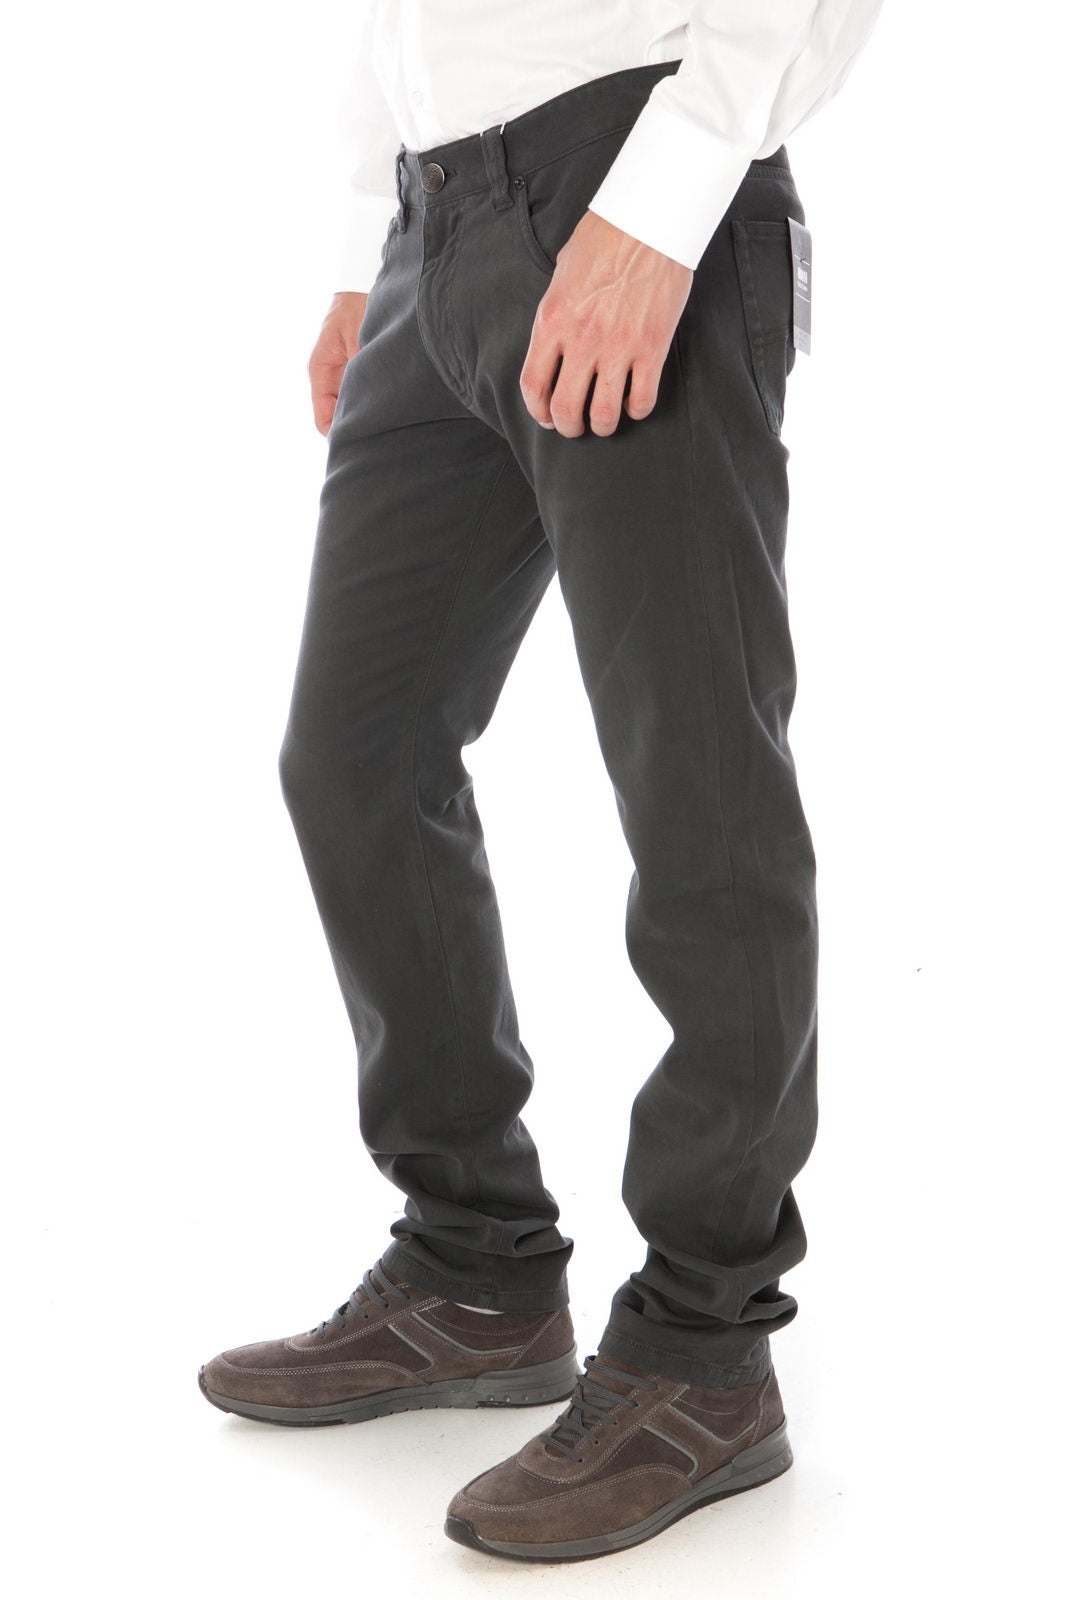 Pantaloni Armani Jeans AJ 32 Grigio Slim Fit - mem39